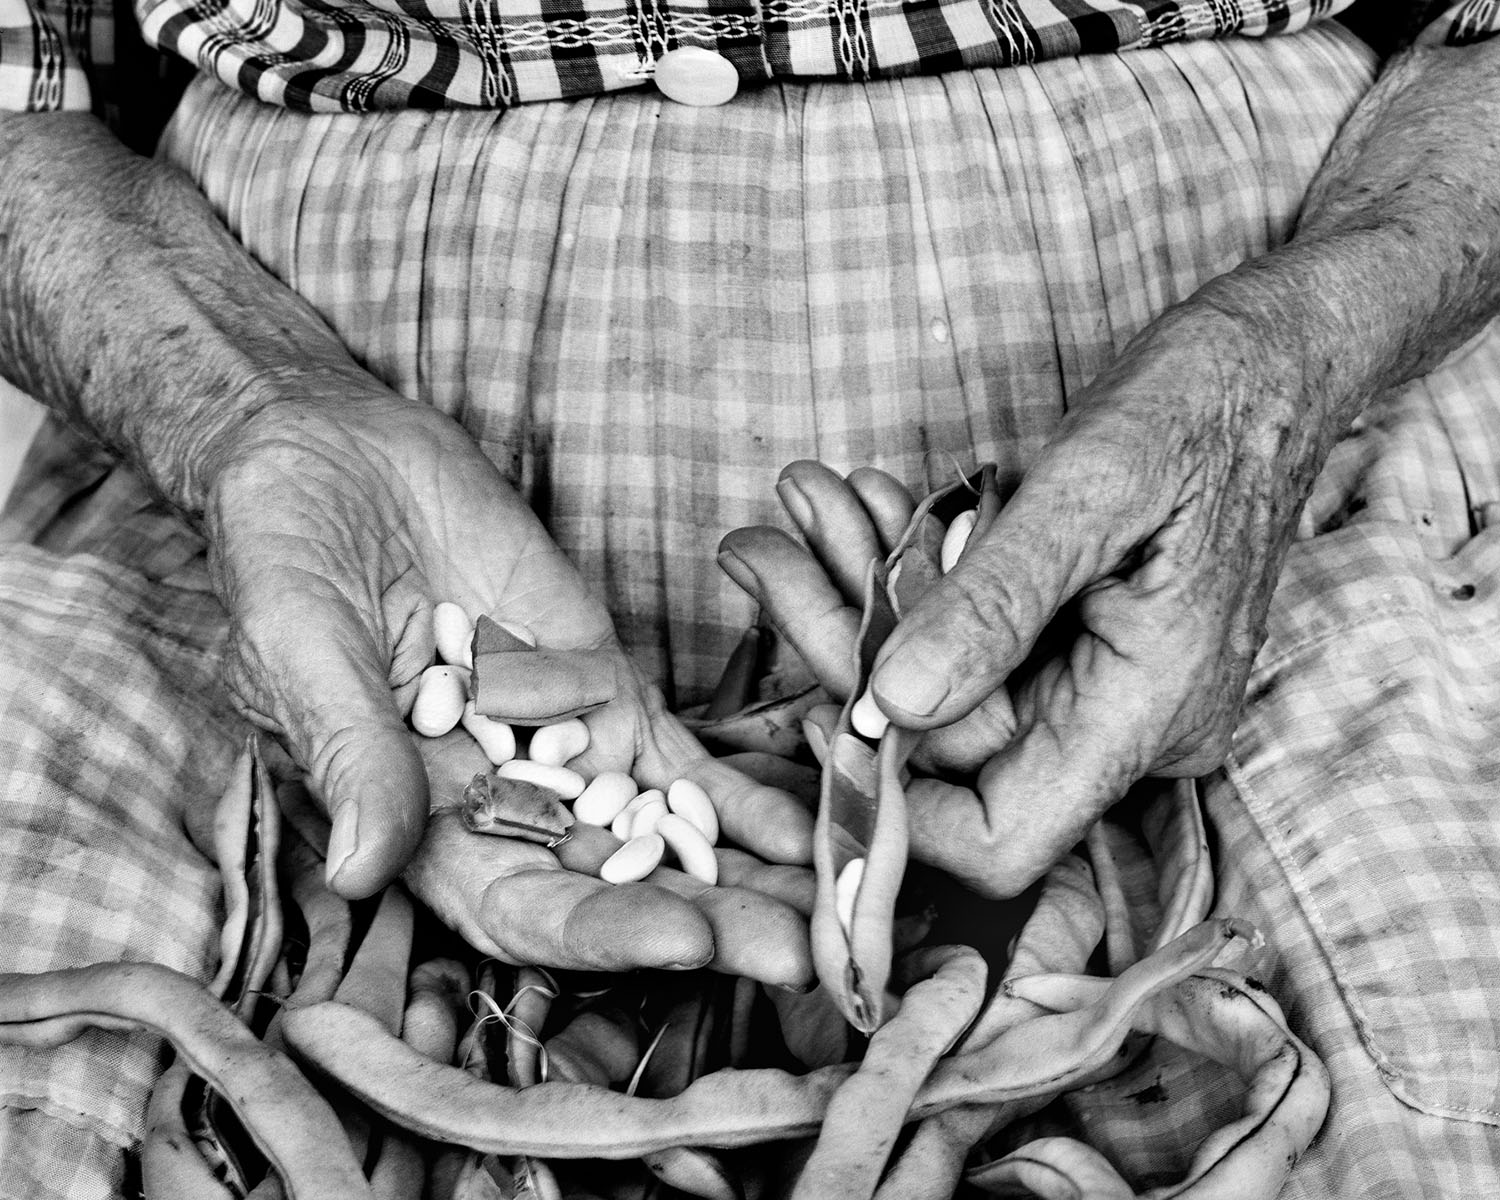 Shelling beans hands Appalachian portrait Tim Barnwell photographer